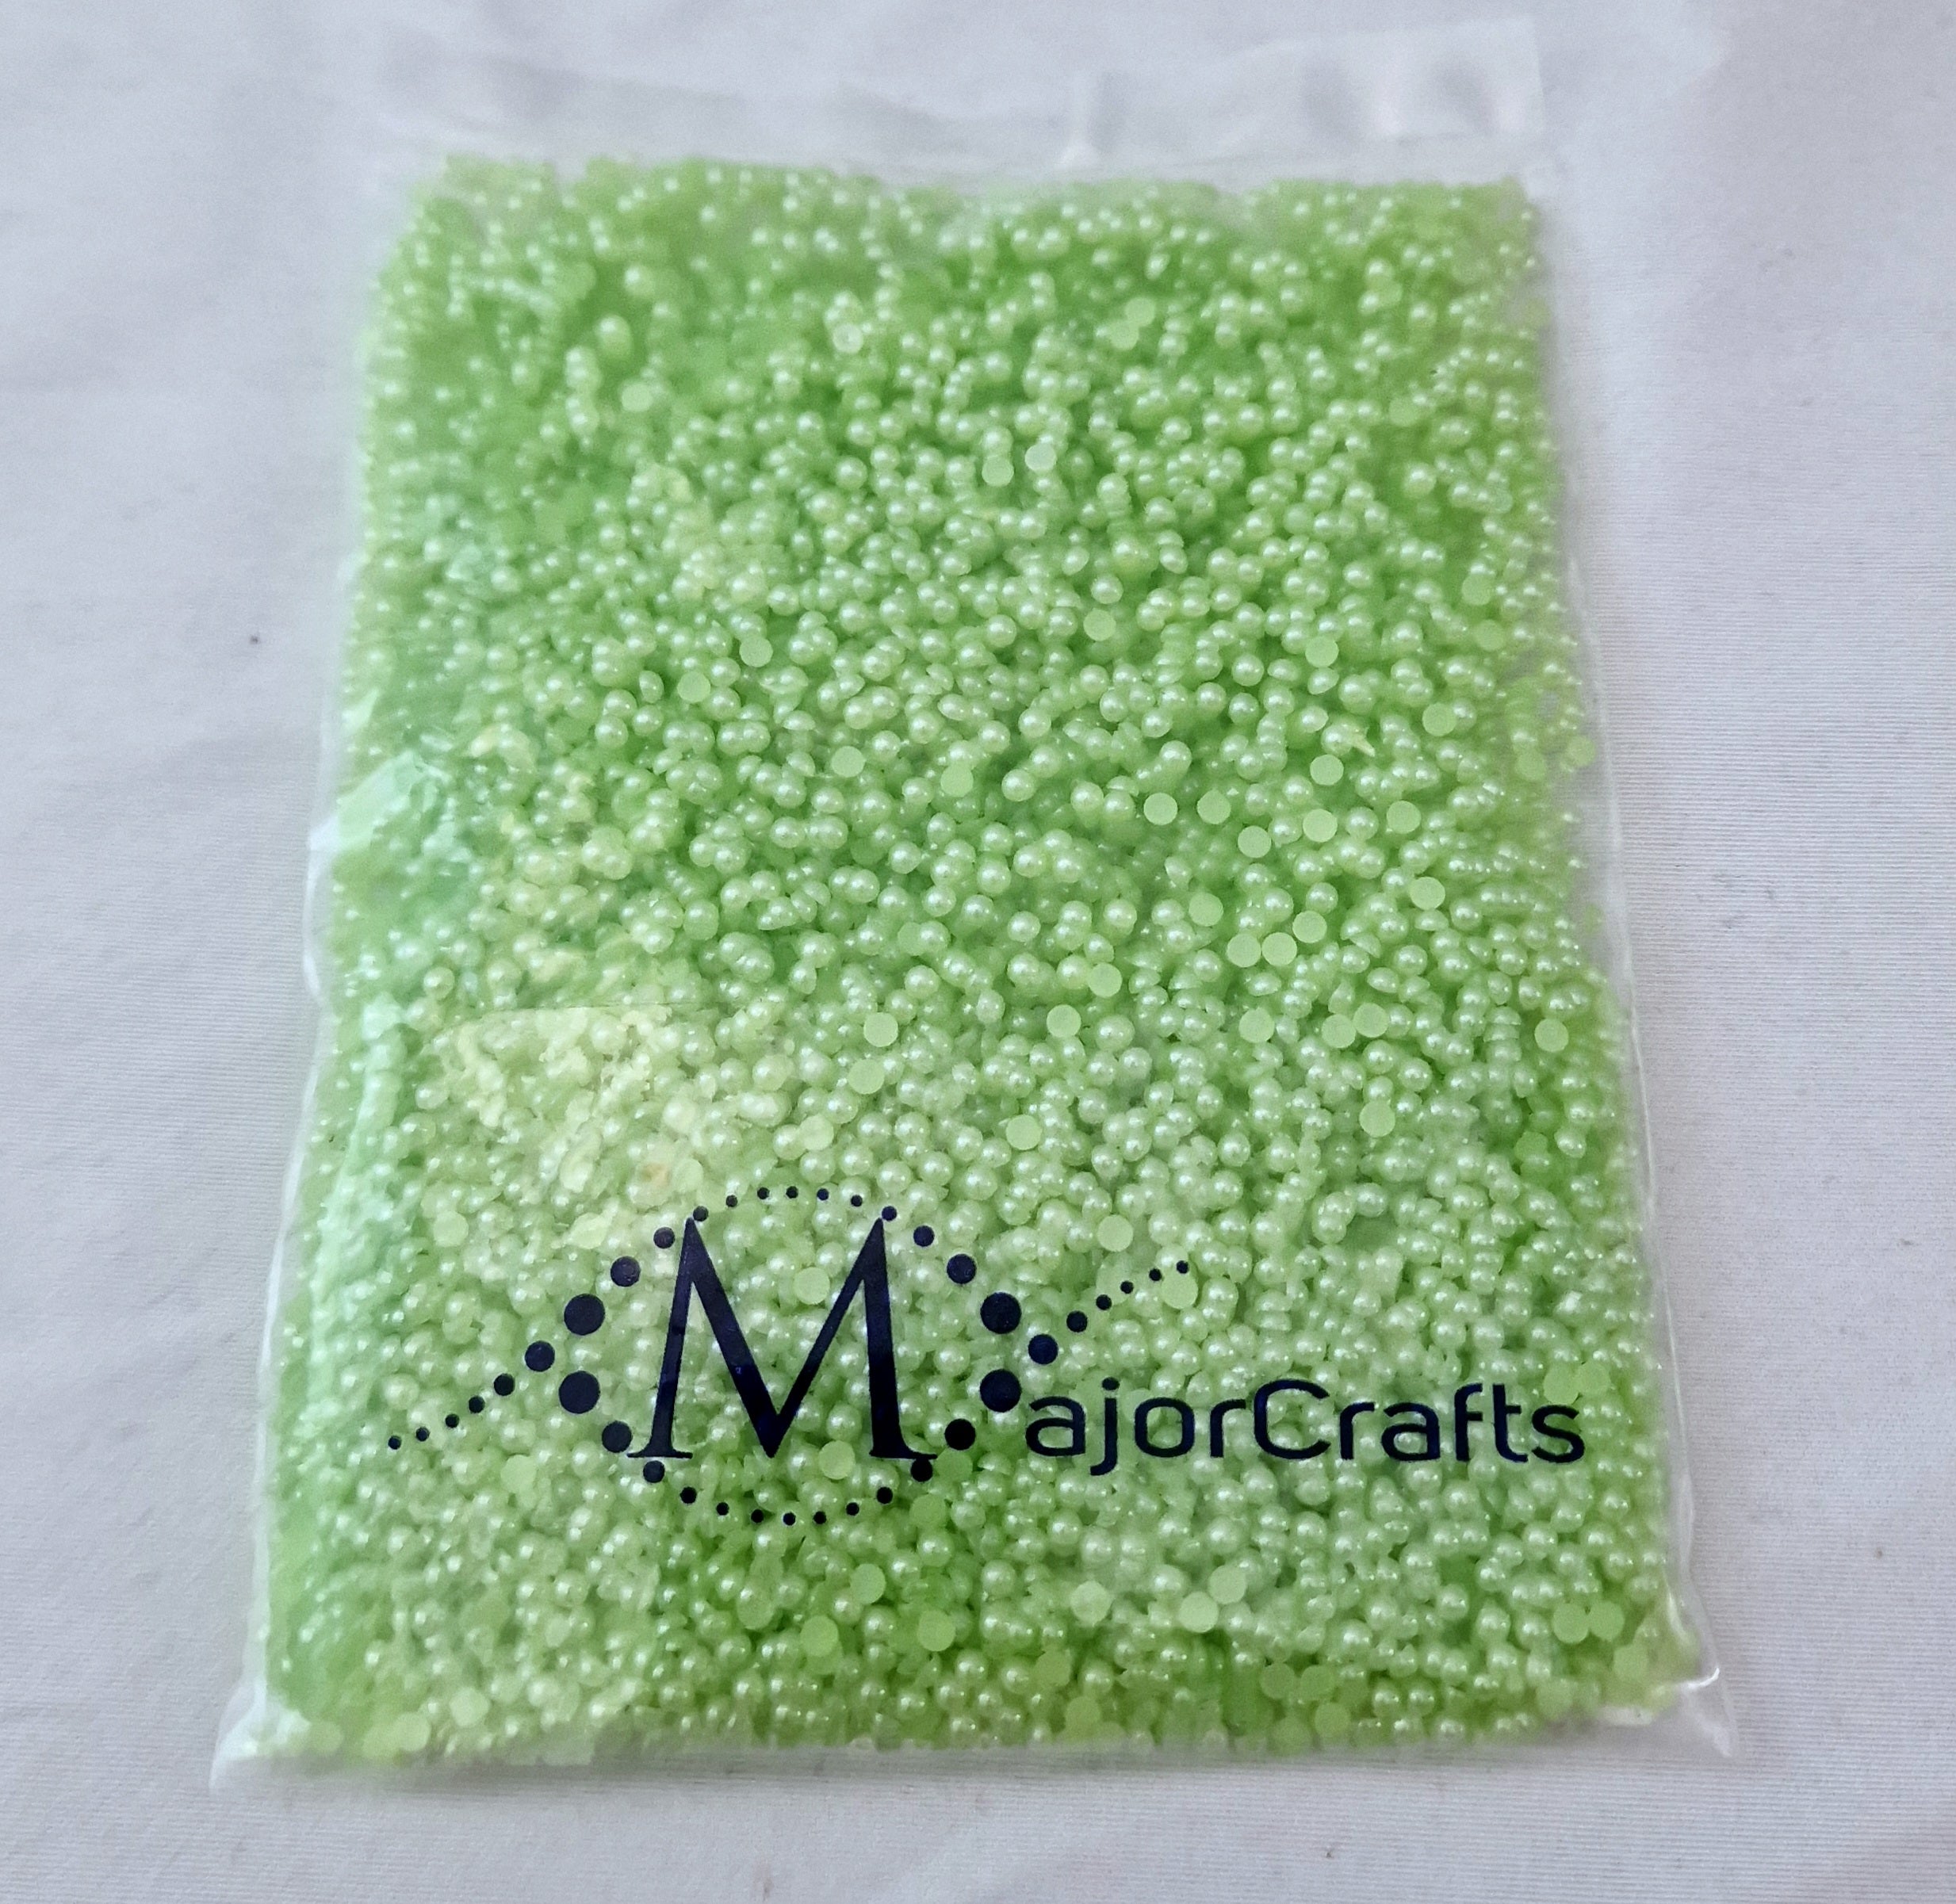 MajorCrafts Light Green Flat Back Half Round Resin Embellishment Pearls C30